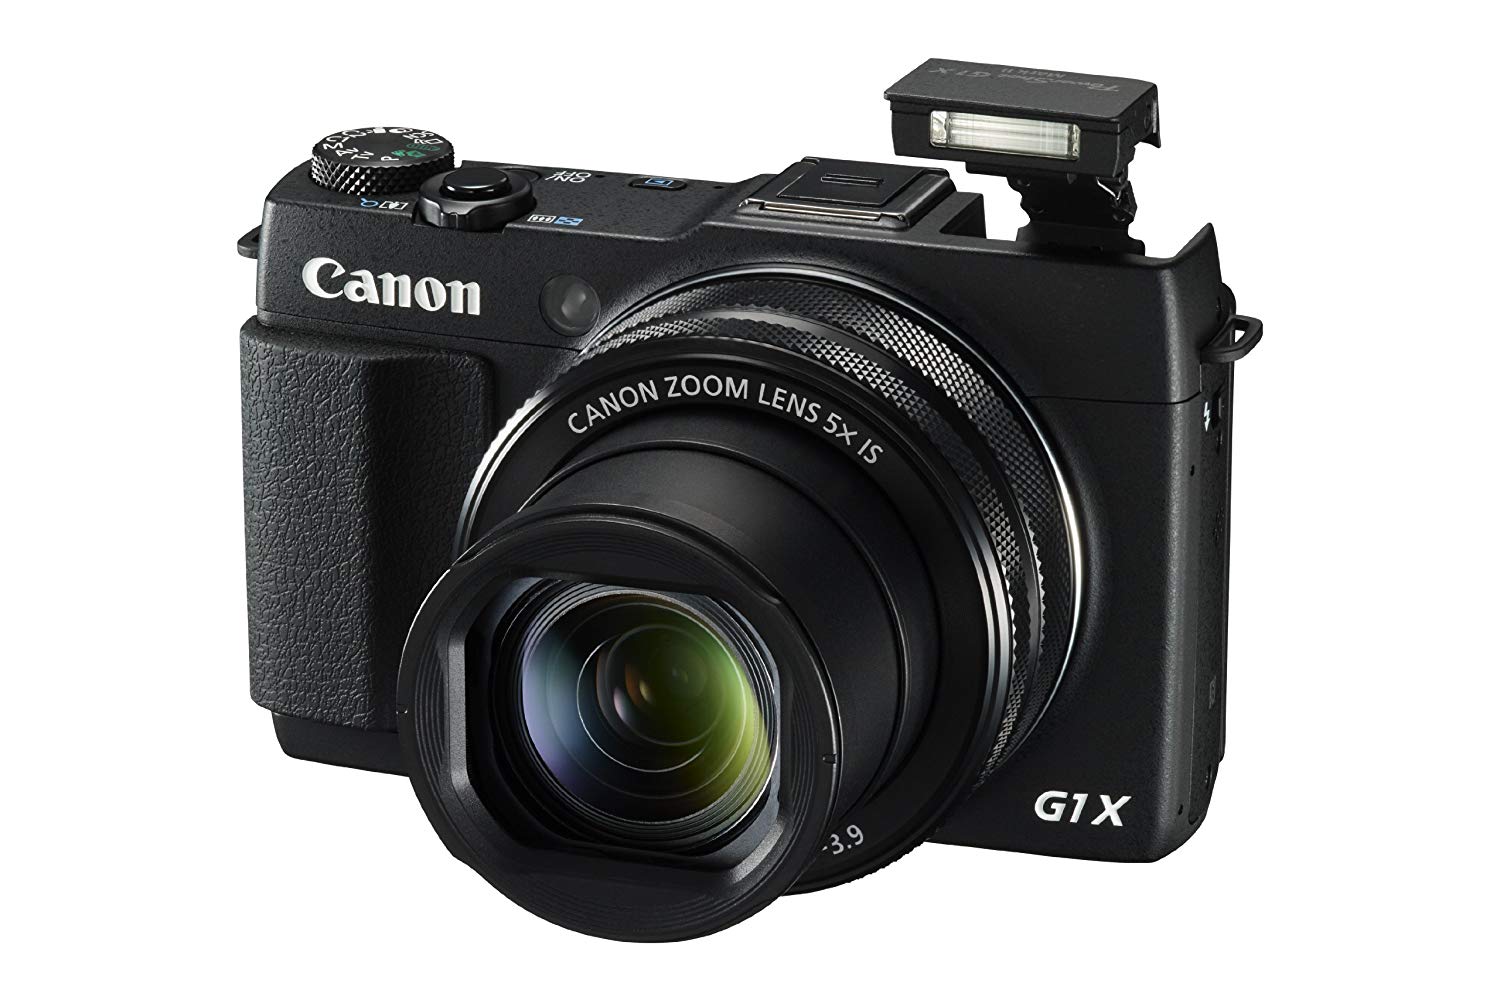 Canon PowerShot G1 X Mark II Digital Camera - Wi-Fi Enabled